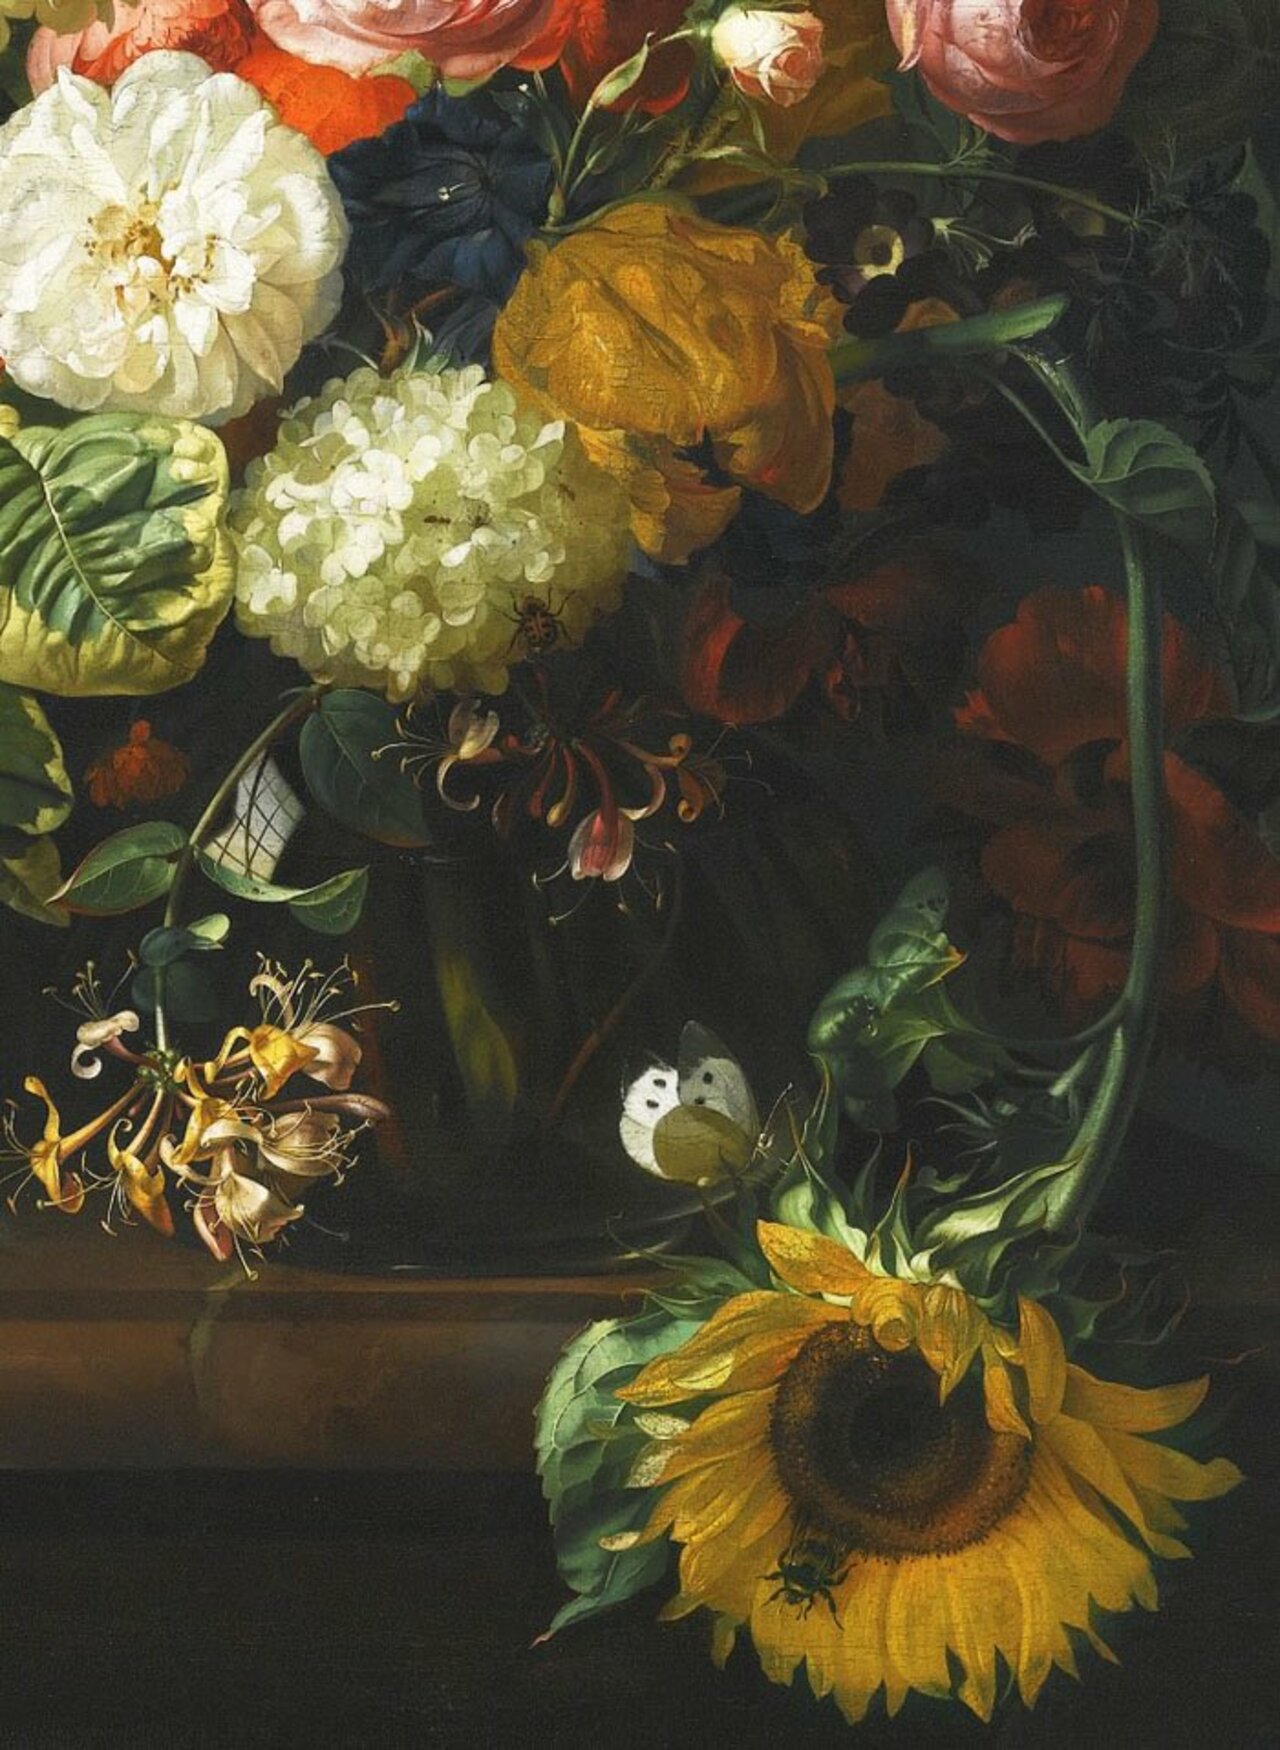 Rachel RuyschDetail from Flower Still Life, 1710 https://t.co/NKx35gNNug